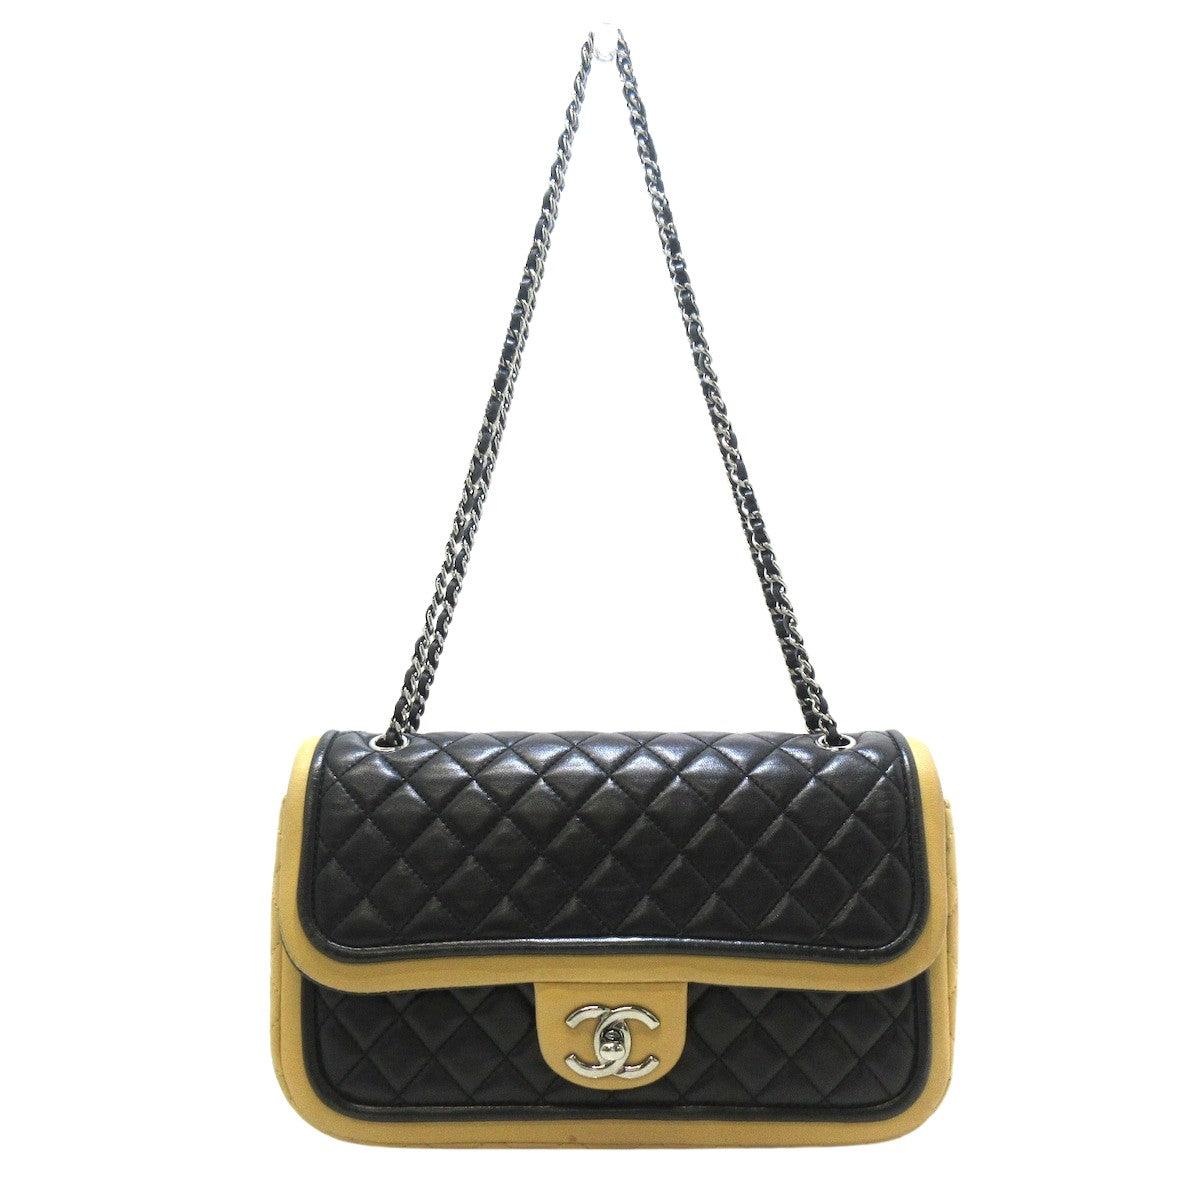 Chanel Single Flap Leather Shoulder Bag (pre-owned) in Black